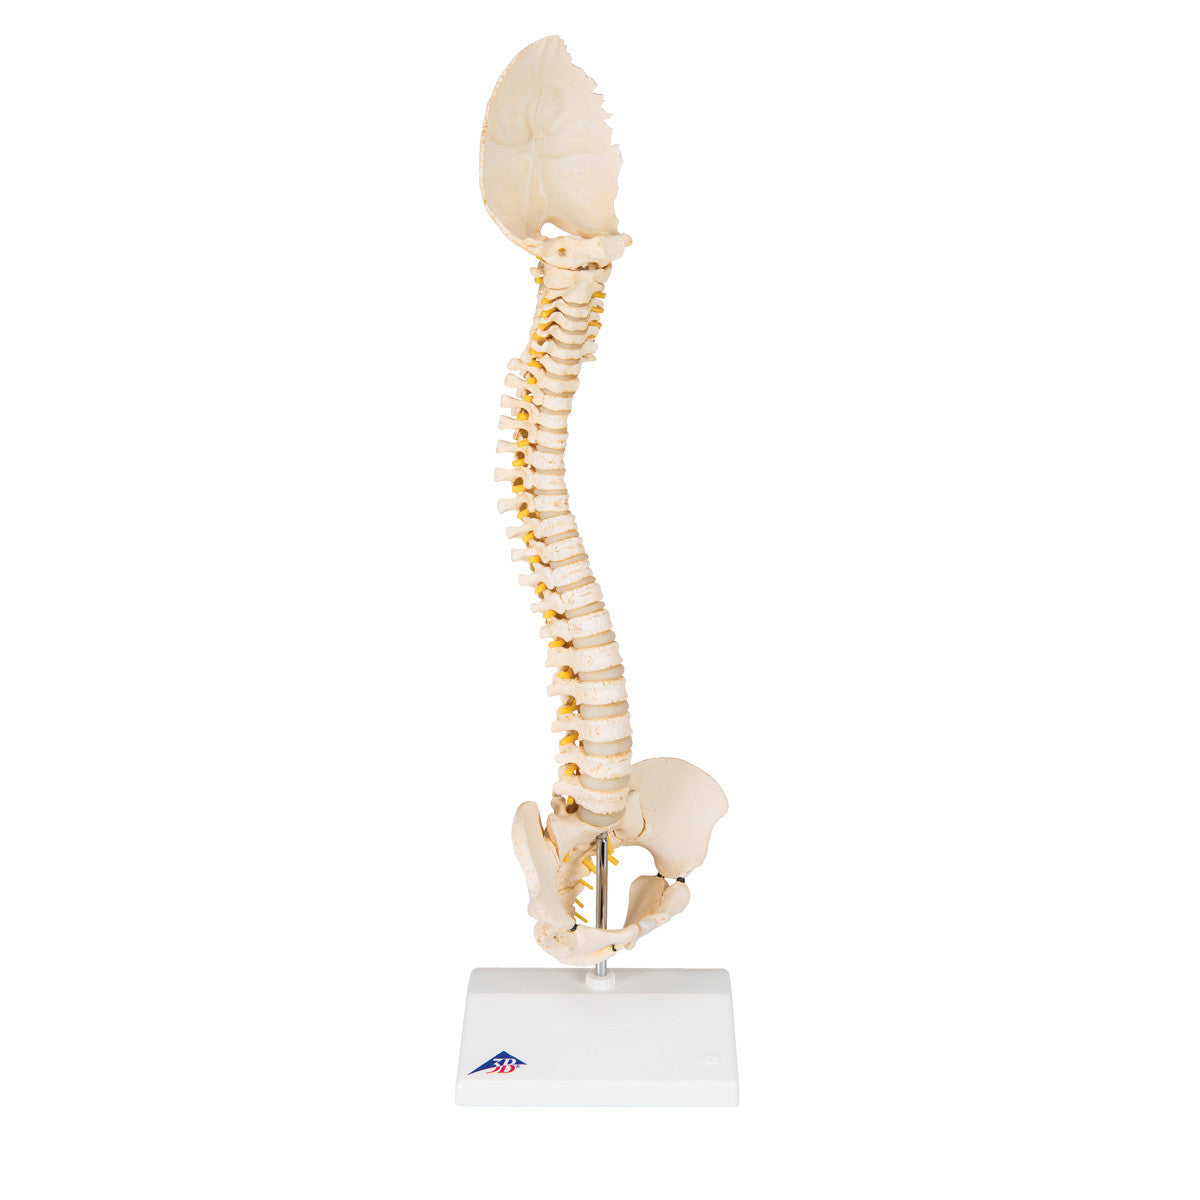 a52_02_1200_1200_bonelike-childs-vertebral-column-model-3b-smart-anatomy__72501.1589753188.1280.1280.jpg